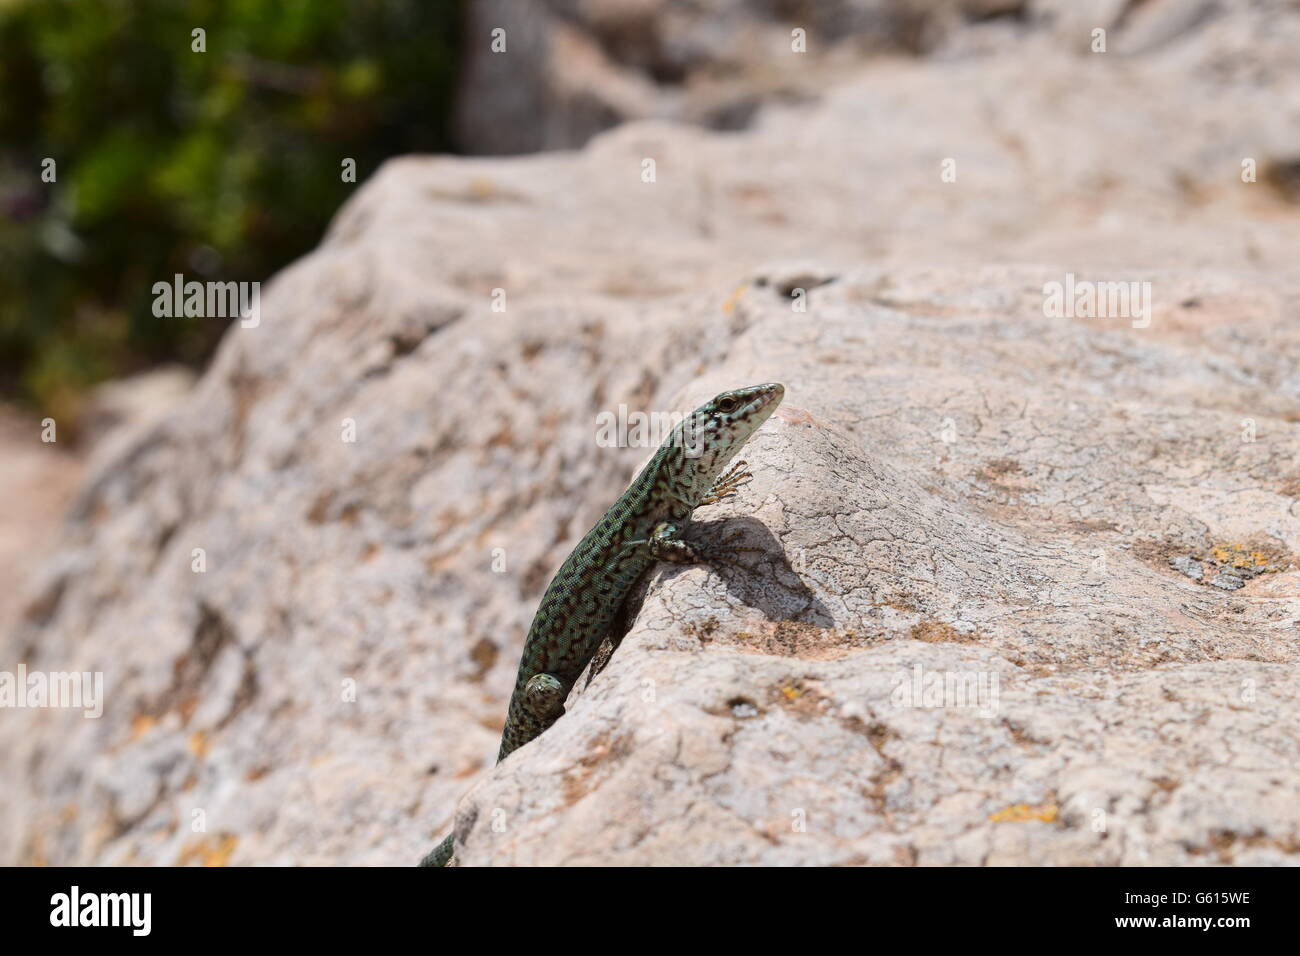 Podarcis Pityusensis Formenterae lizard basking in the sun Stock Photo